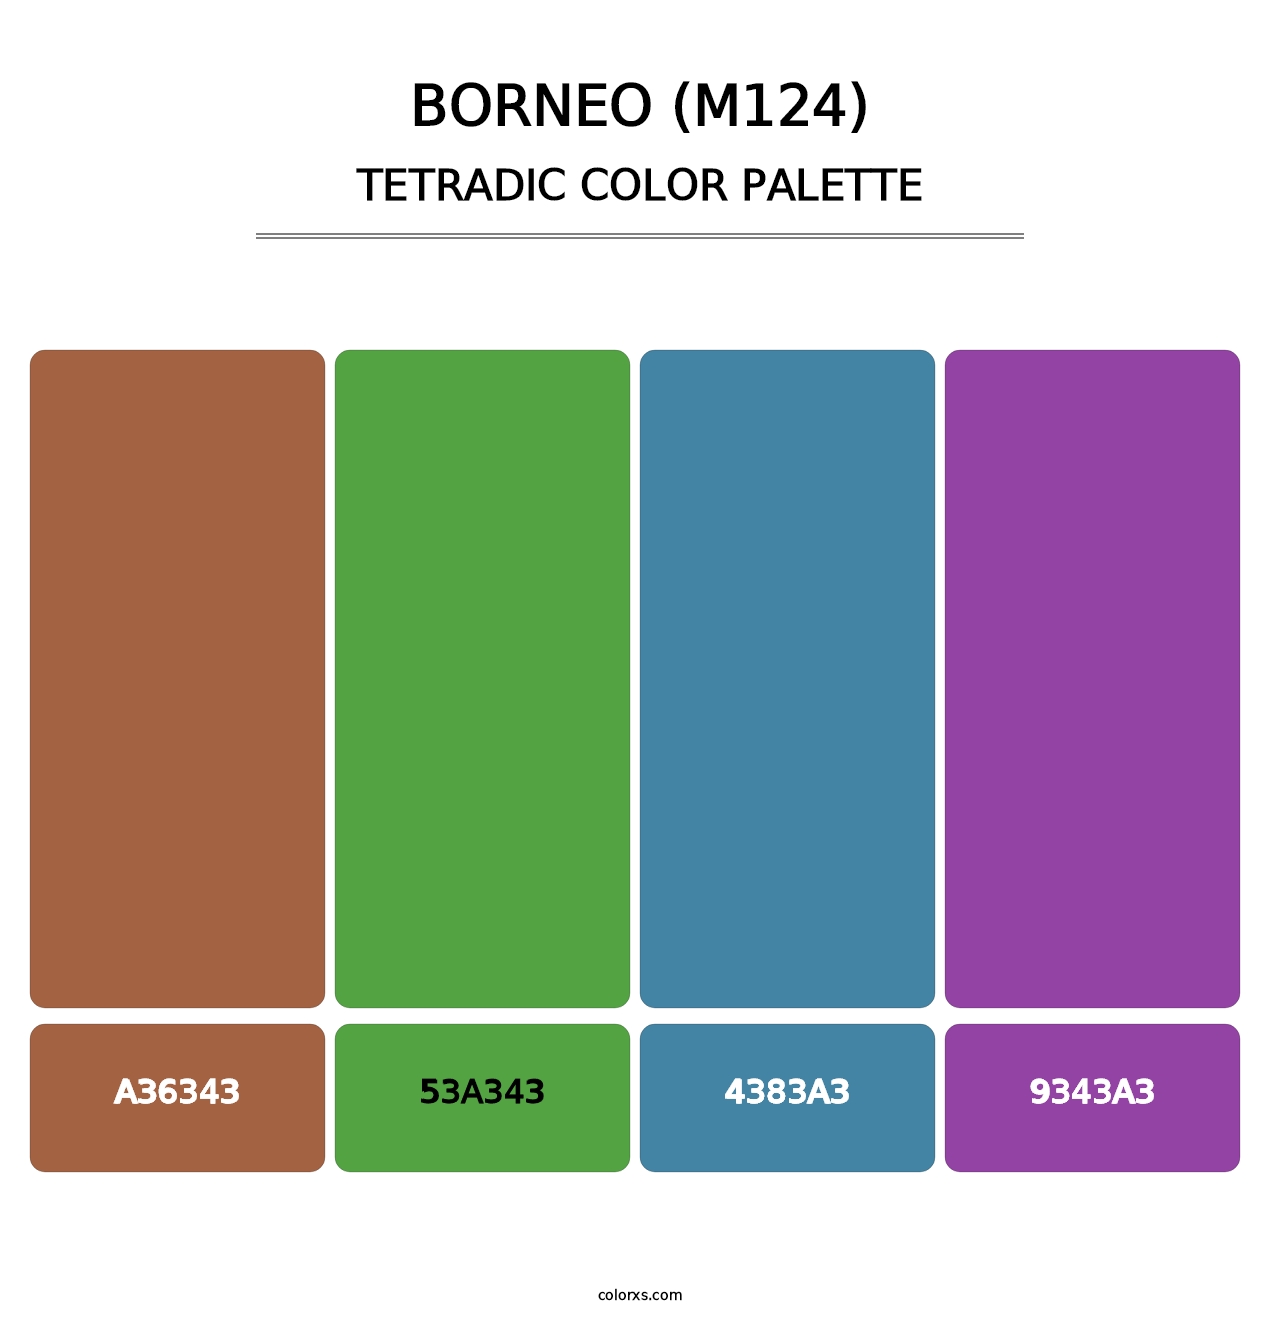 Borneo (M124) - Tetradic Color Palette